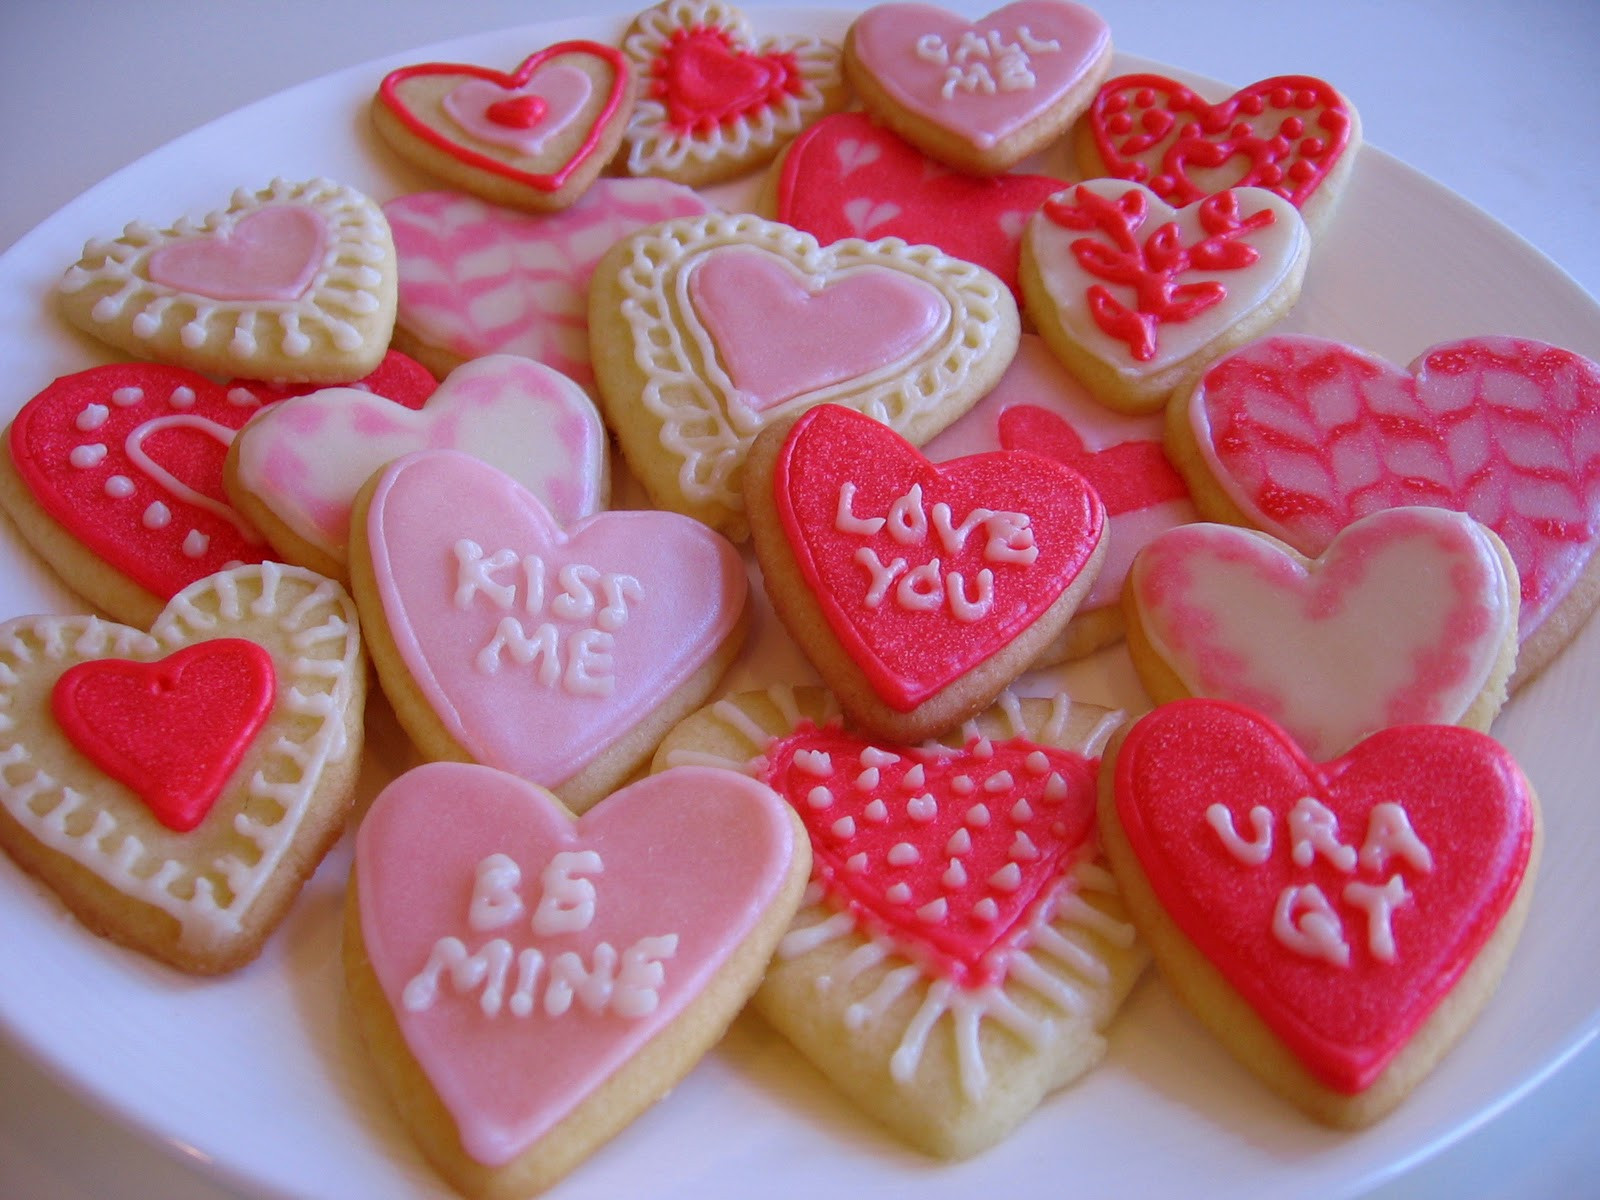 Decorating Valentine Sugar Cookies
 Needle and Spatula Valentine Heart Sugar Cookies Part 2